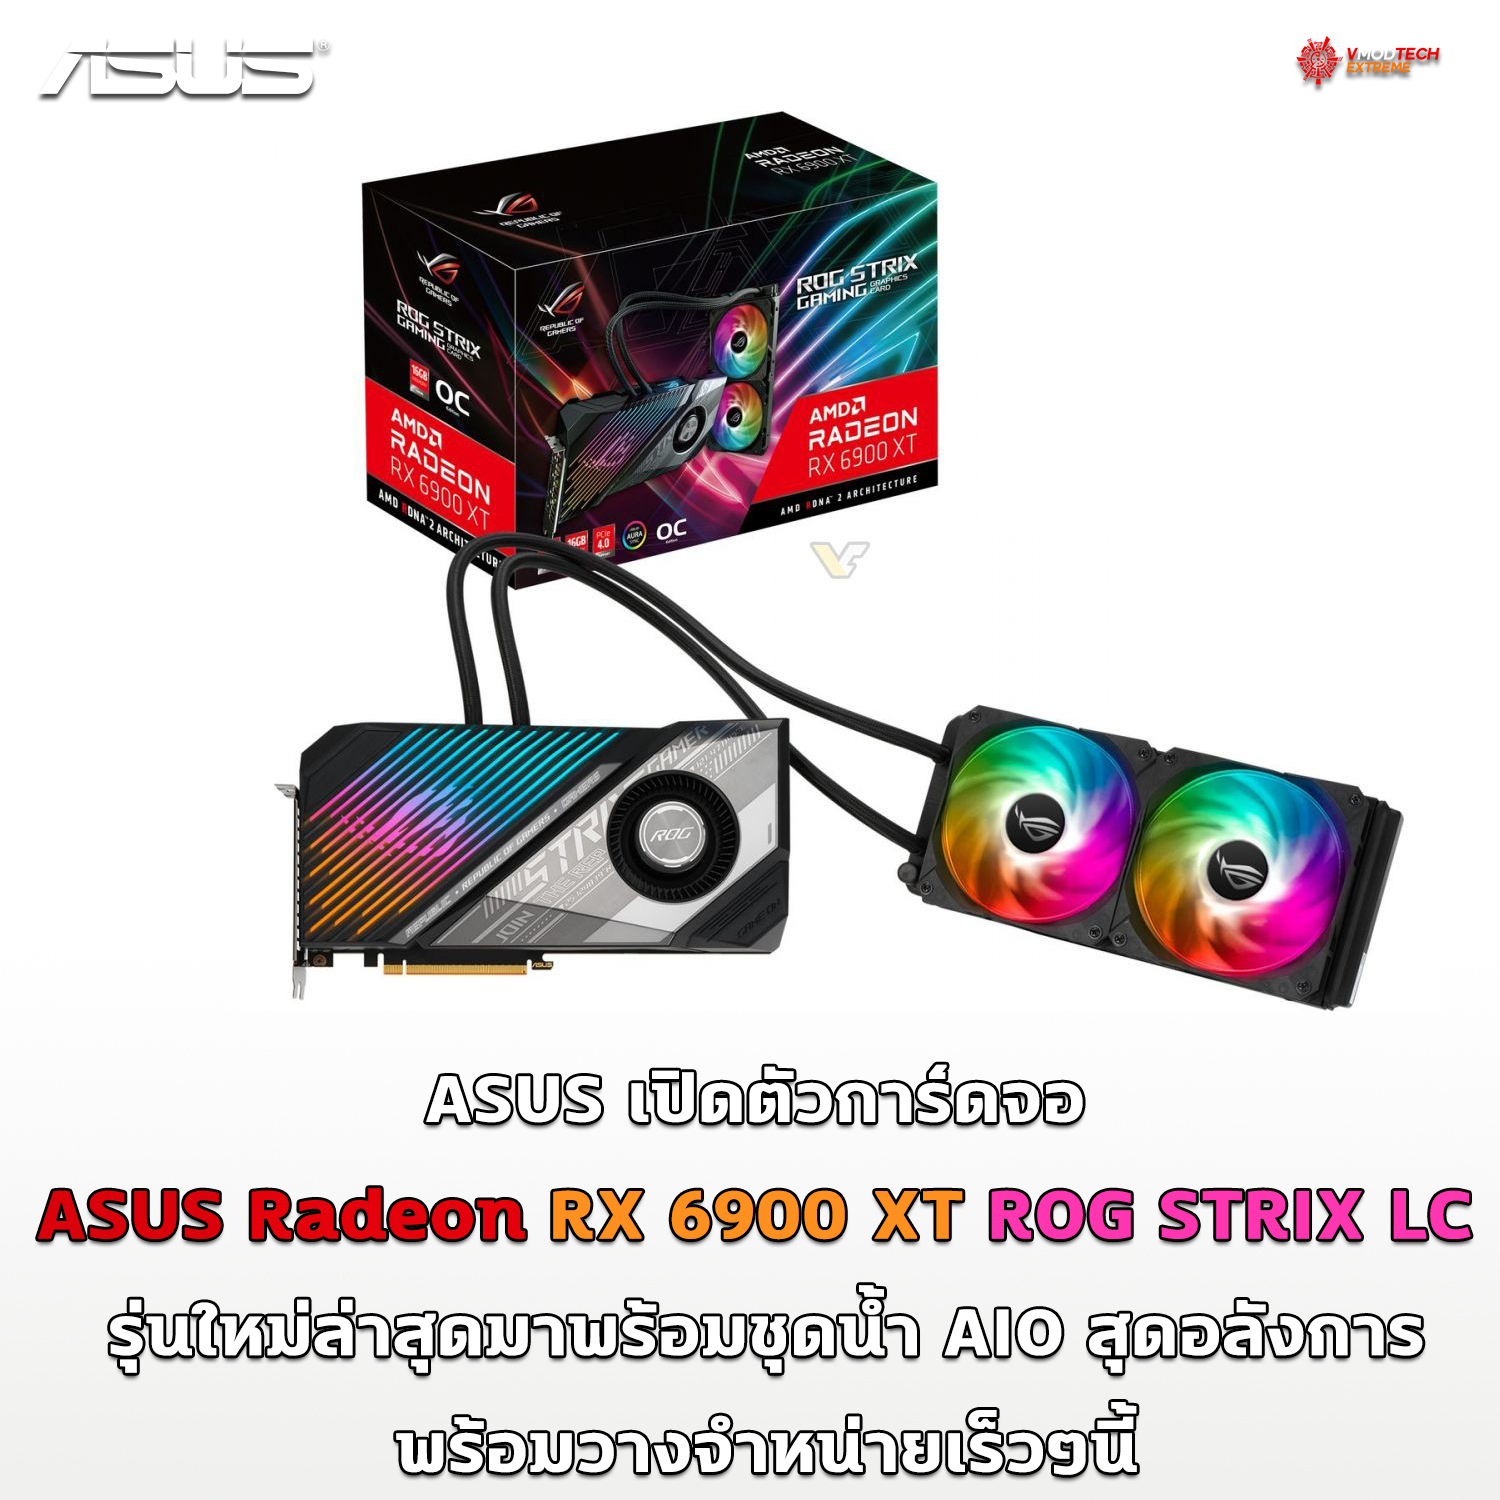 asus radeon rx 6900 xt rog strix lc ASUS เปิดตัวการ์ดจอ ASUS Radeon RX 6900 XT ROG STRIX LC รุ่นใหม่ล่าสุดมาพร้อมชุดน้ำสุดอลังการ